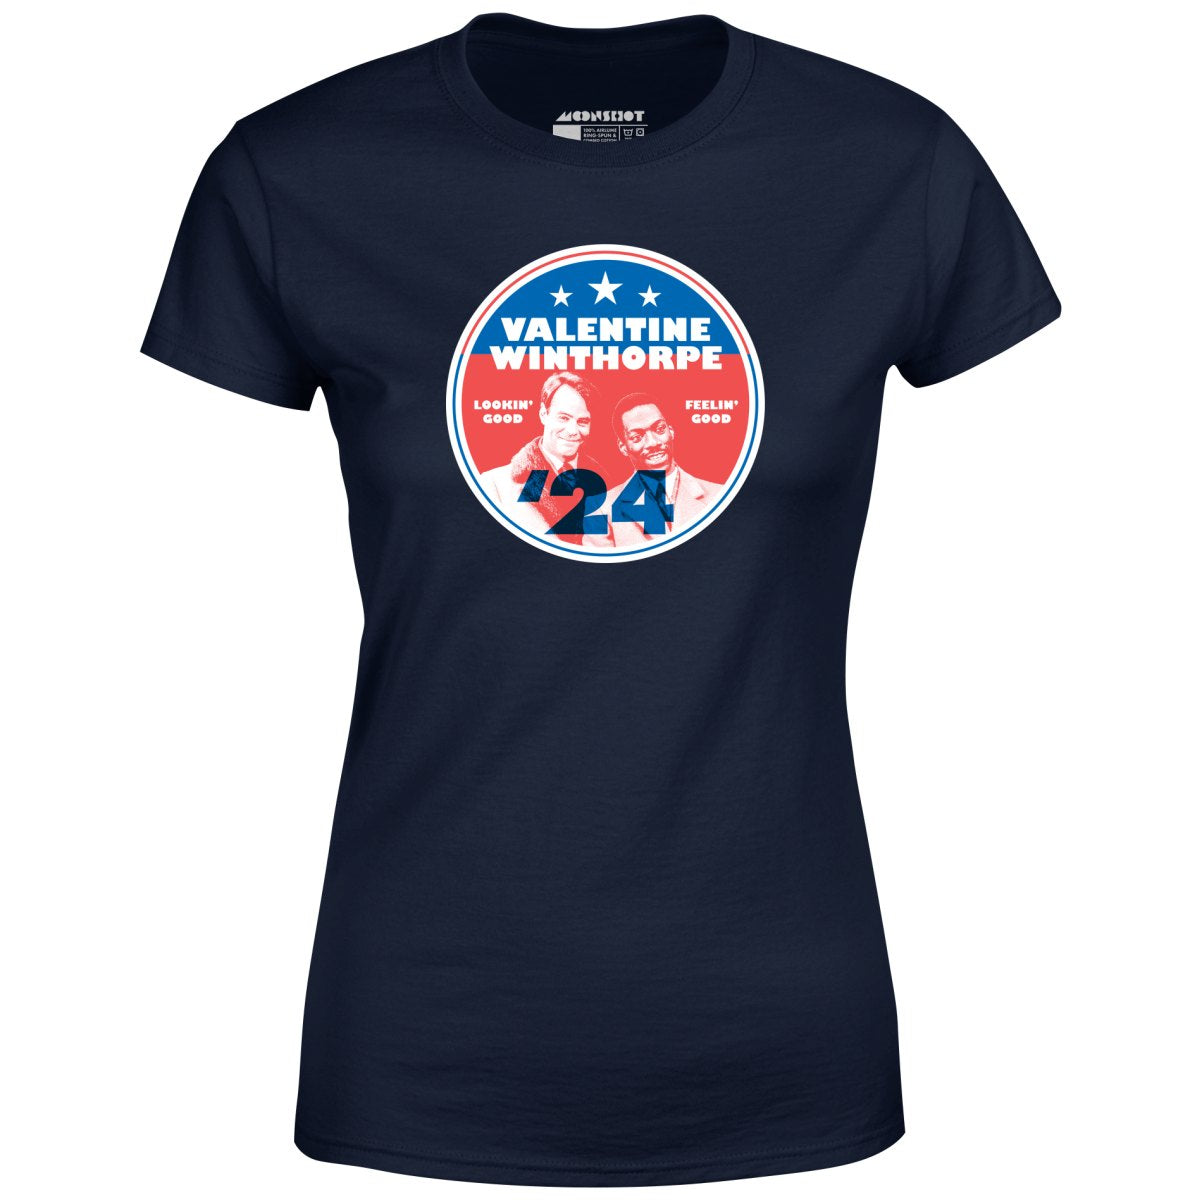 Valentine & Winthorpe 2024 - Women's T-Shirt